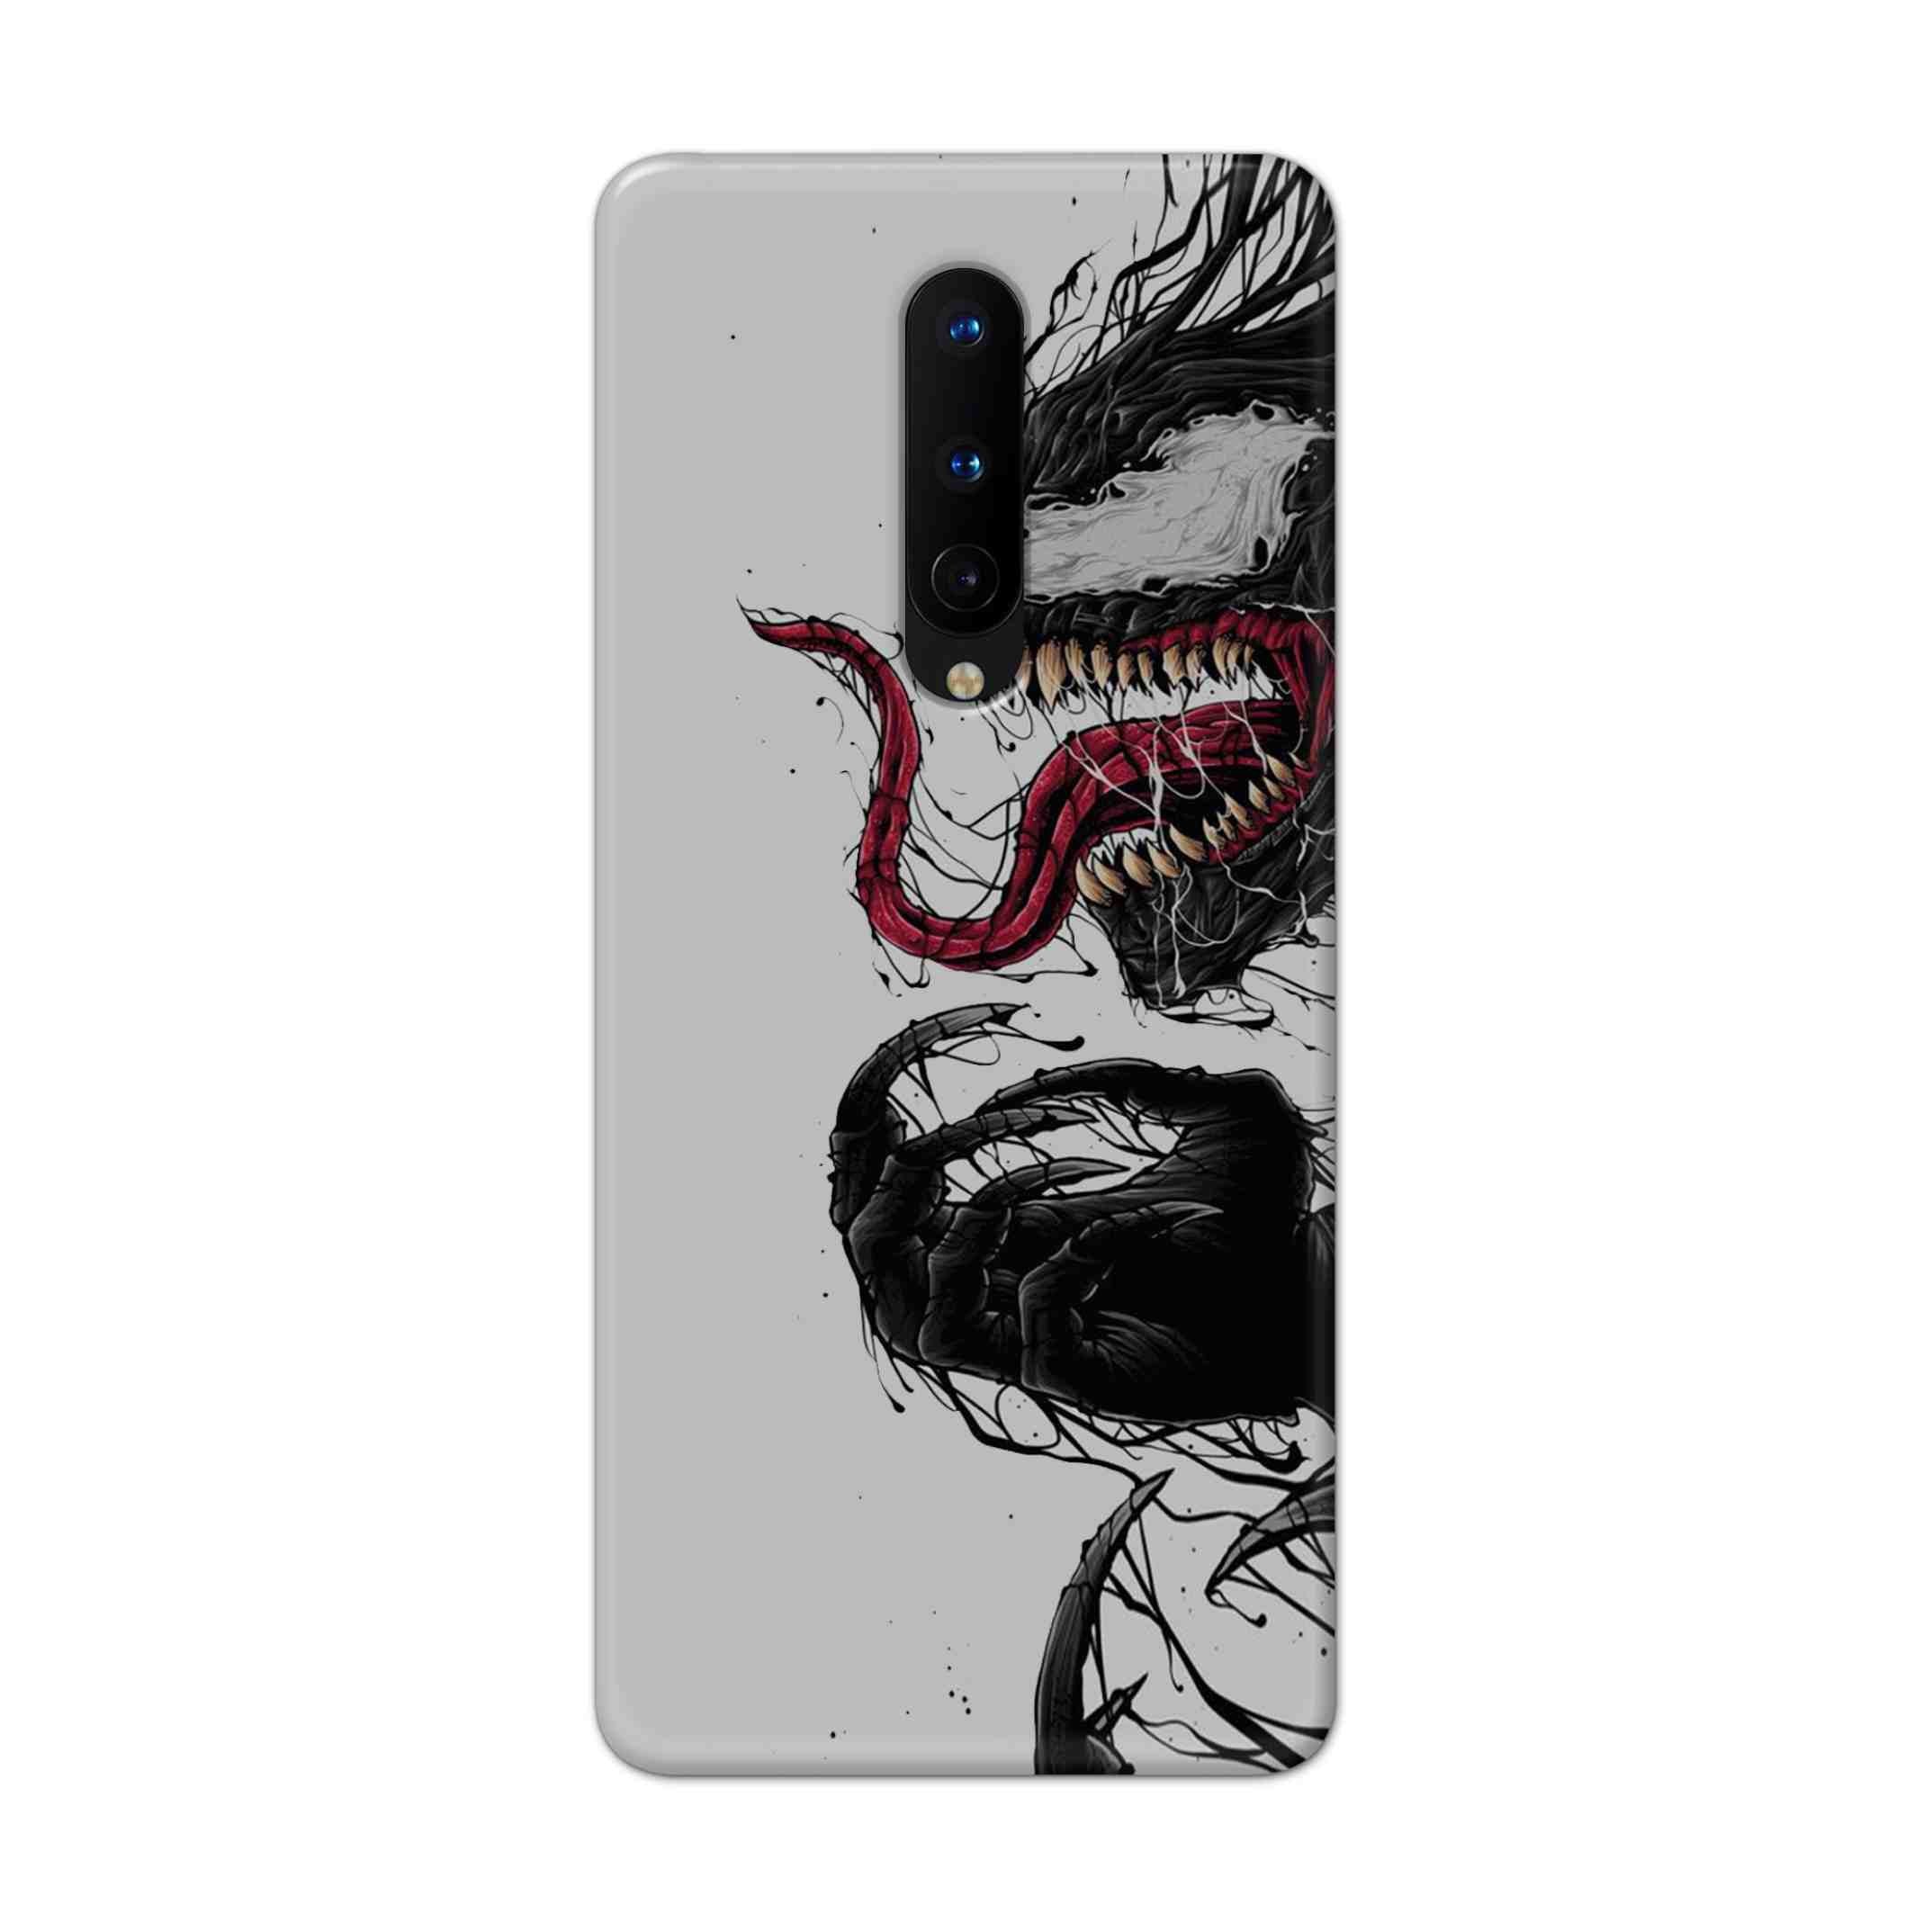 Buy Venom Crazy Hard Back Mobile Phone Case Cover For OnePlus 8 Online